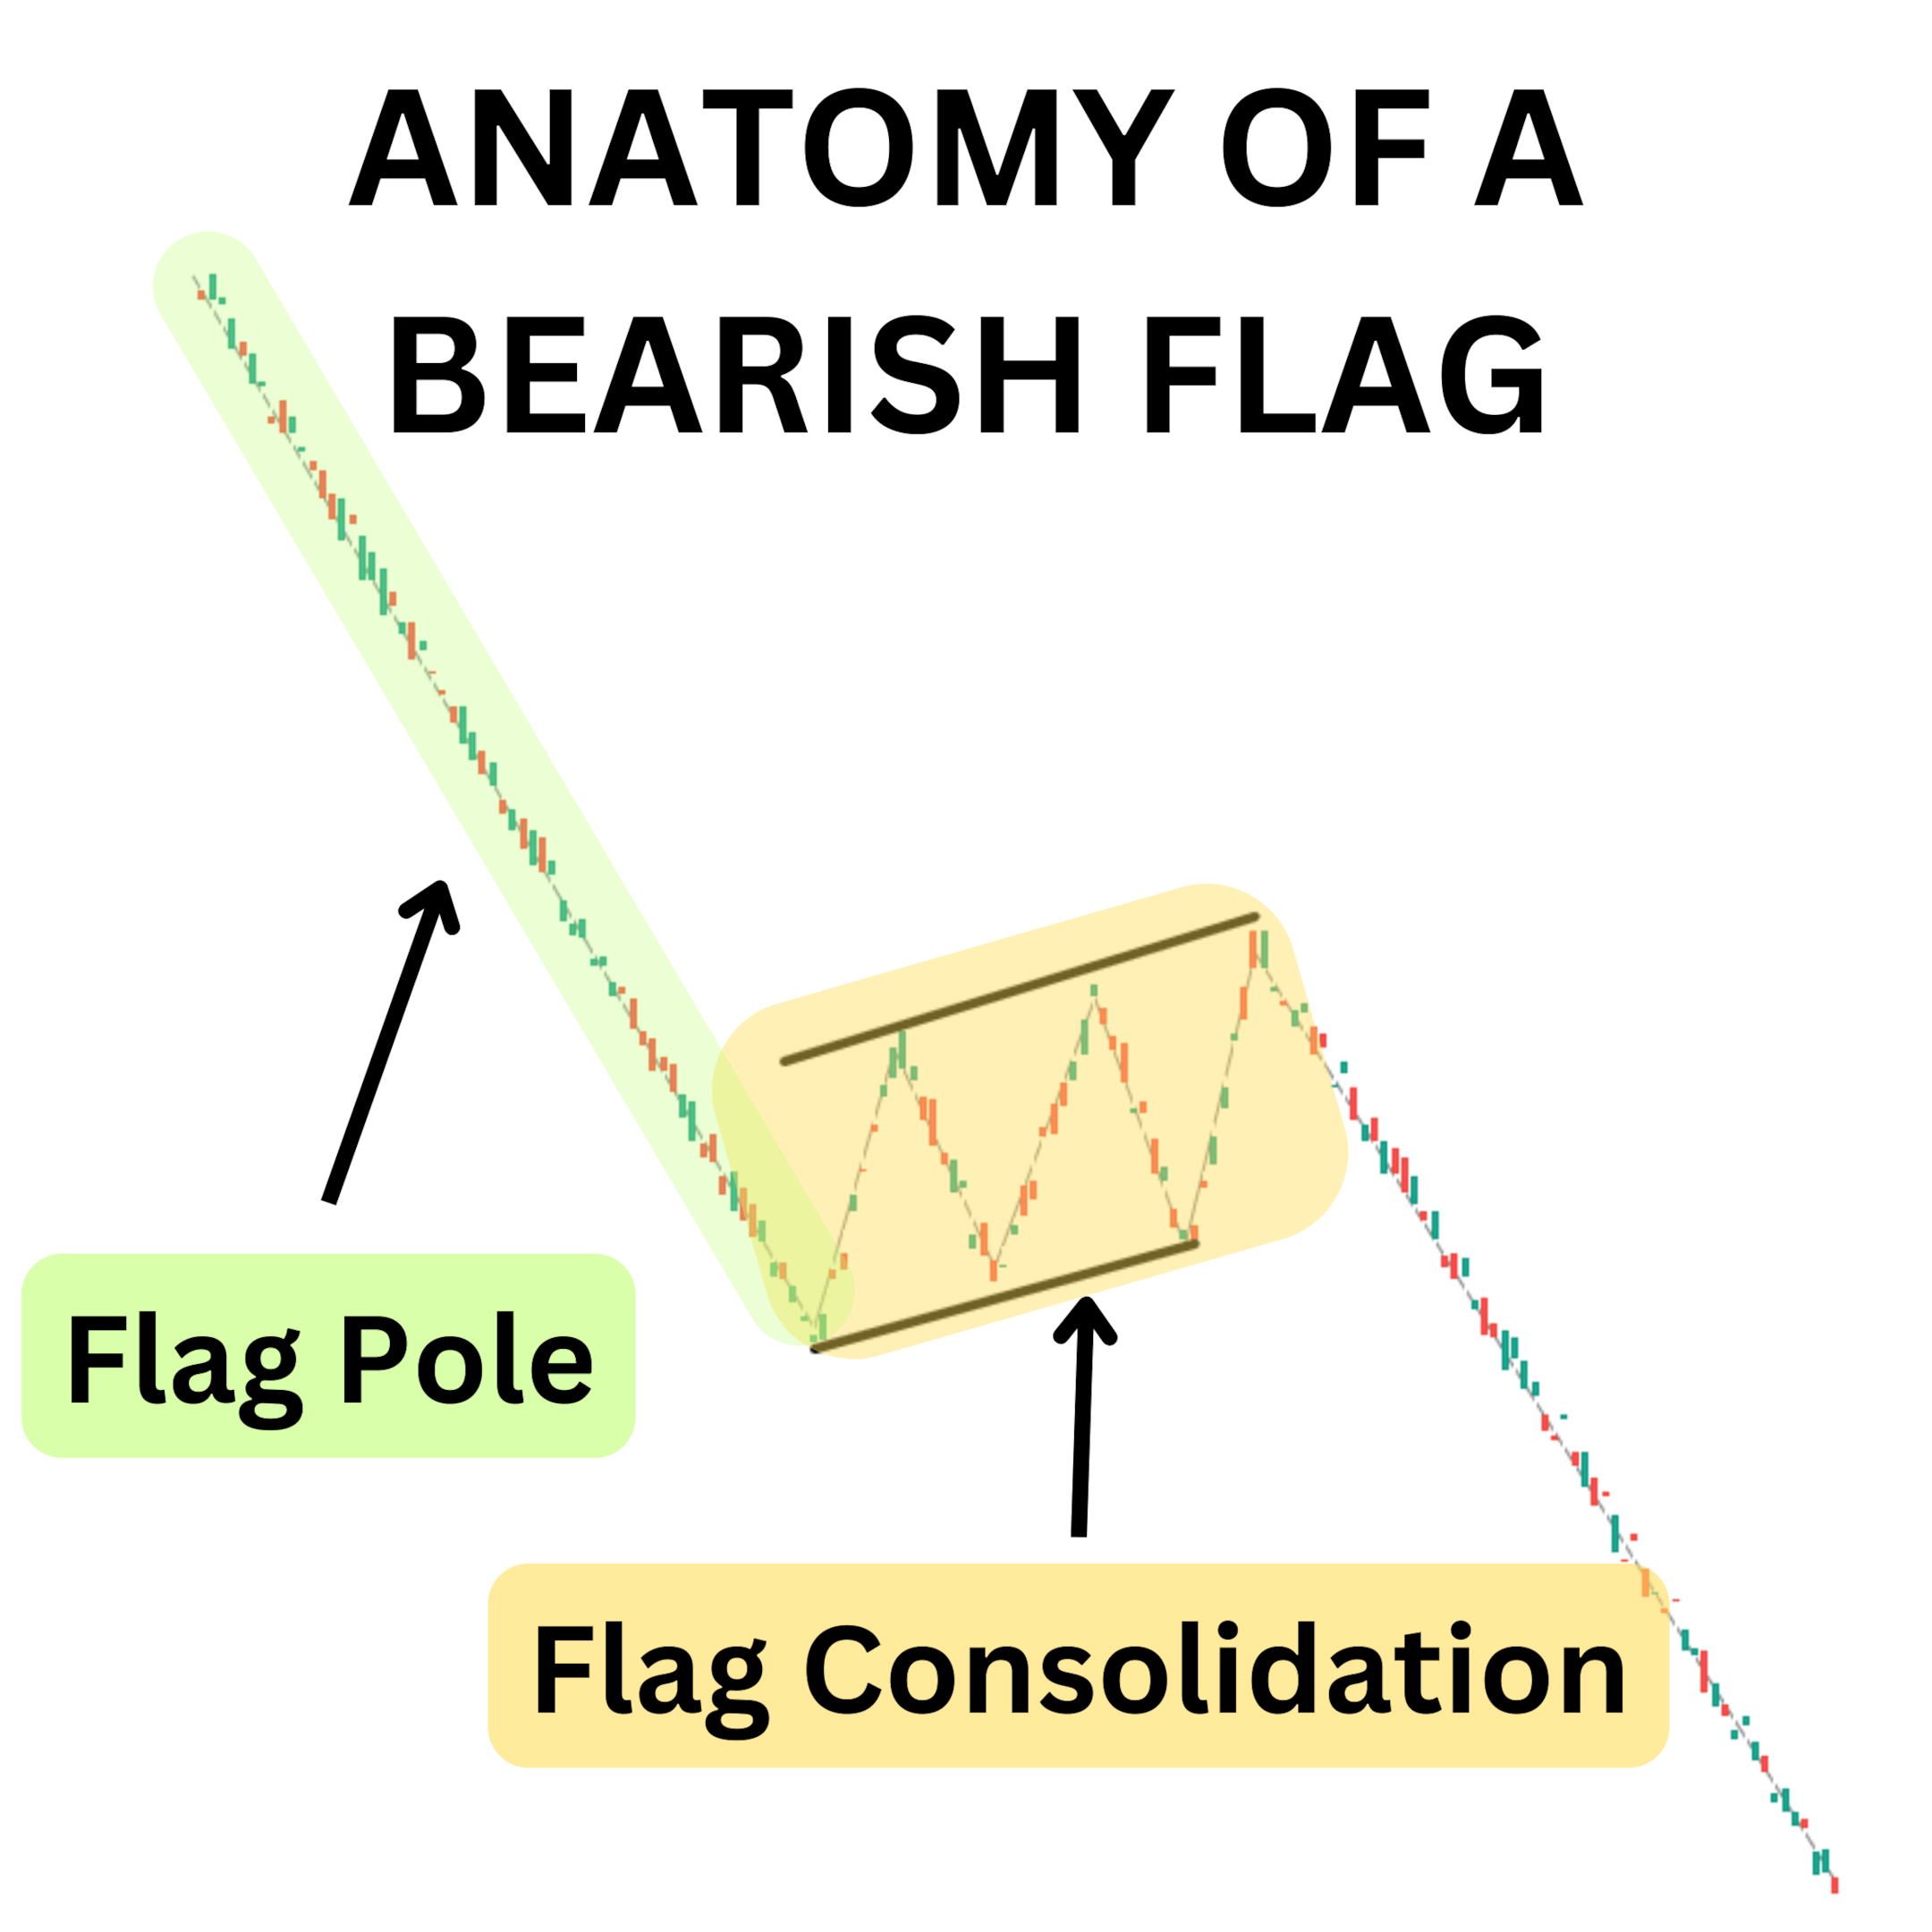 Anatomy of a bearish flag